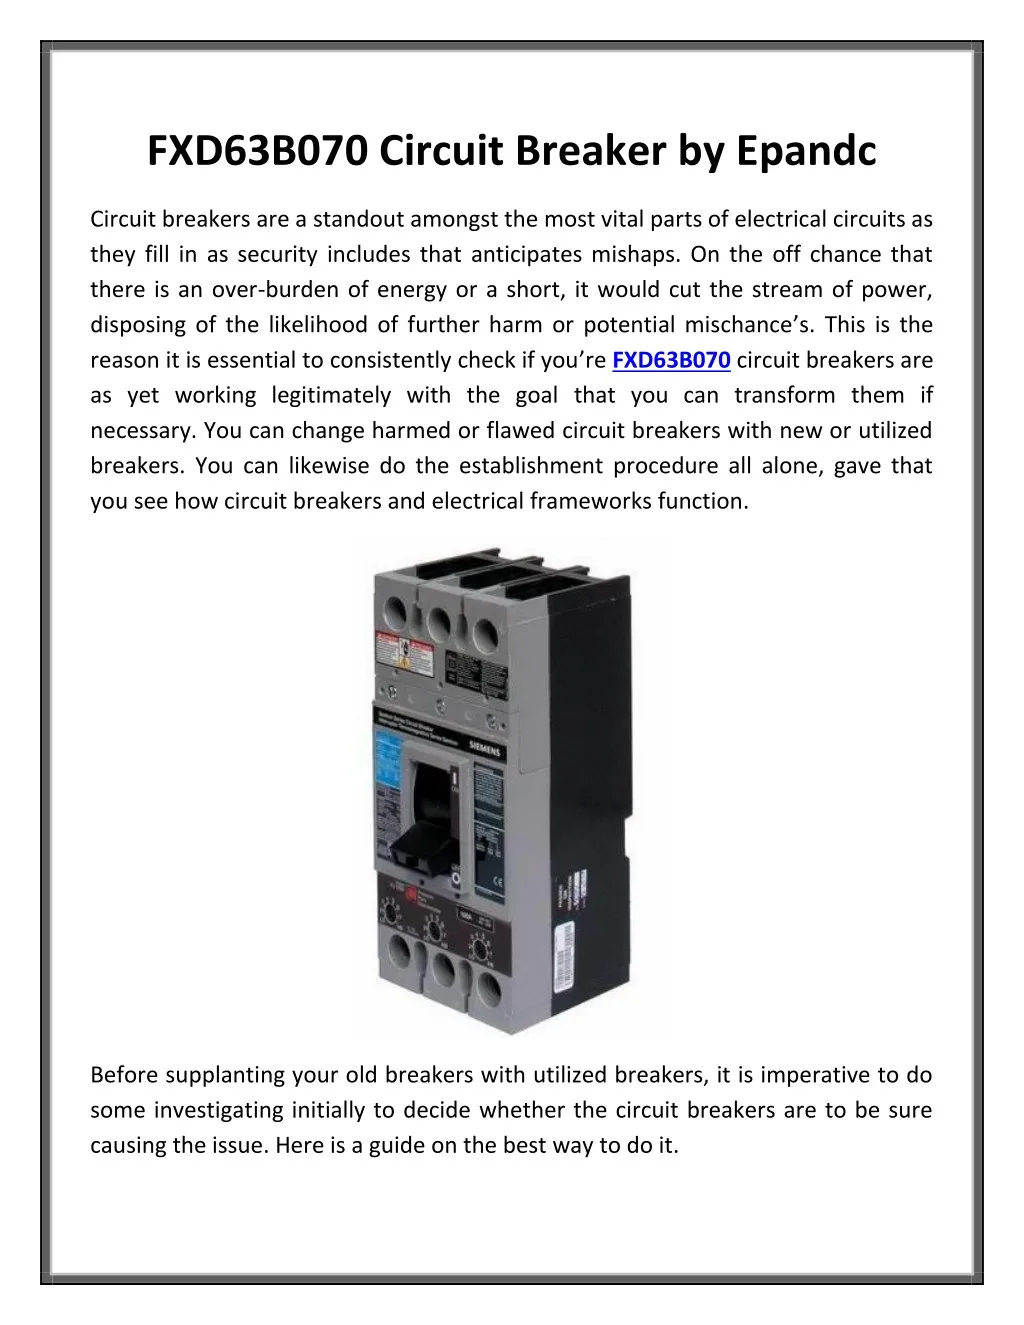 fxd63b070 circuit breaker by epandc